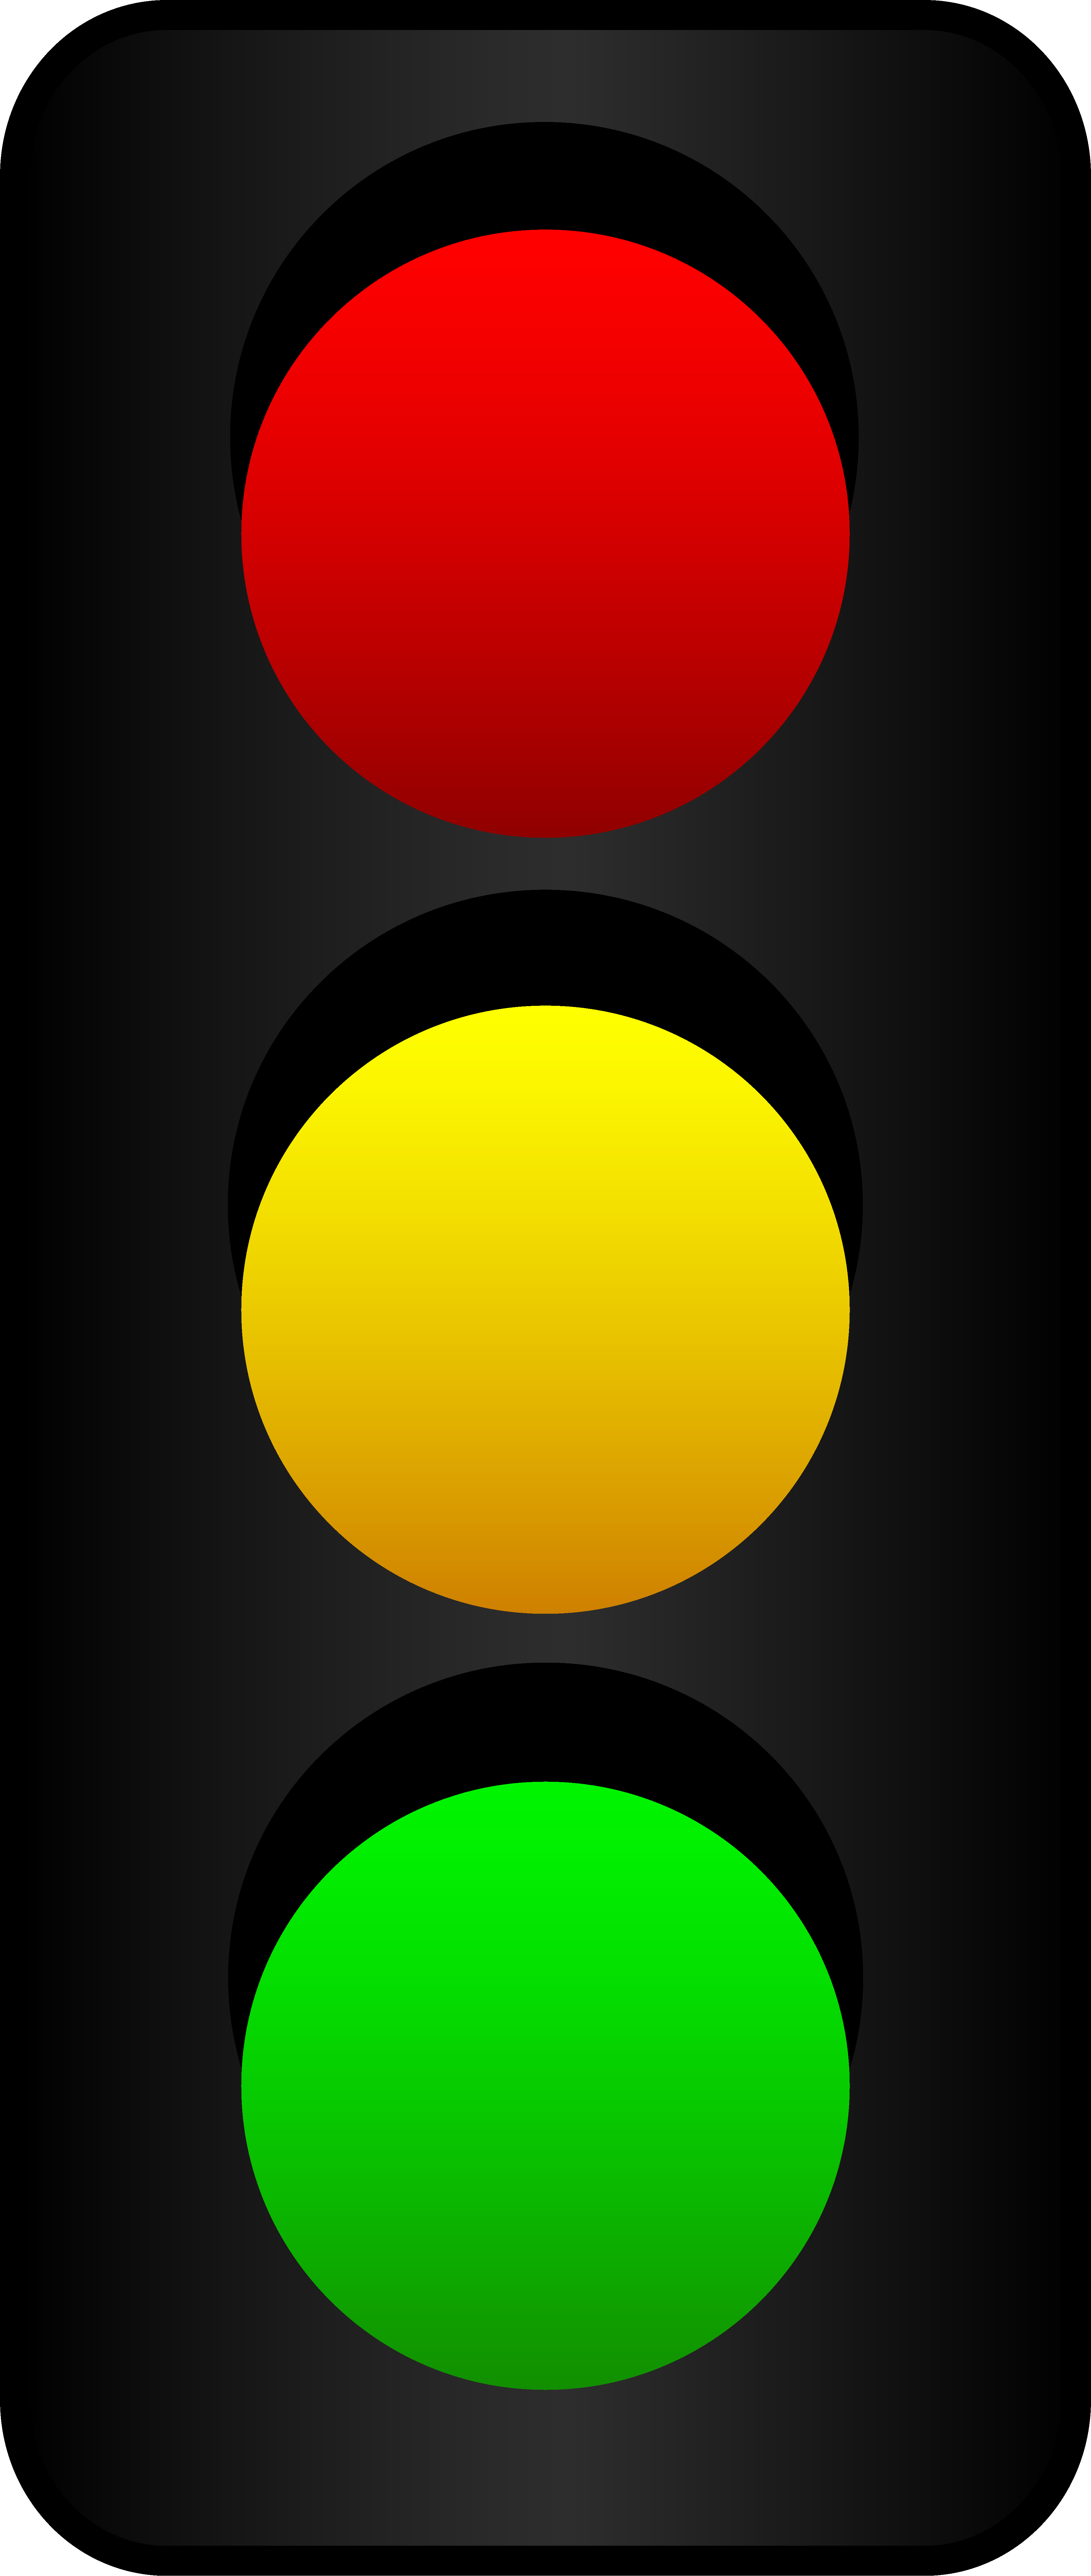 Traffic Light Design - Free Clip Art